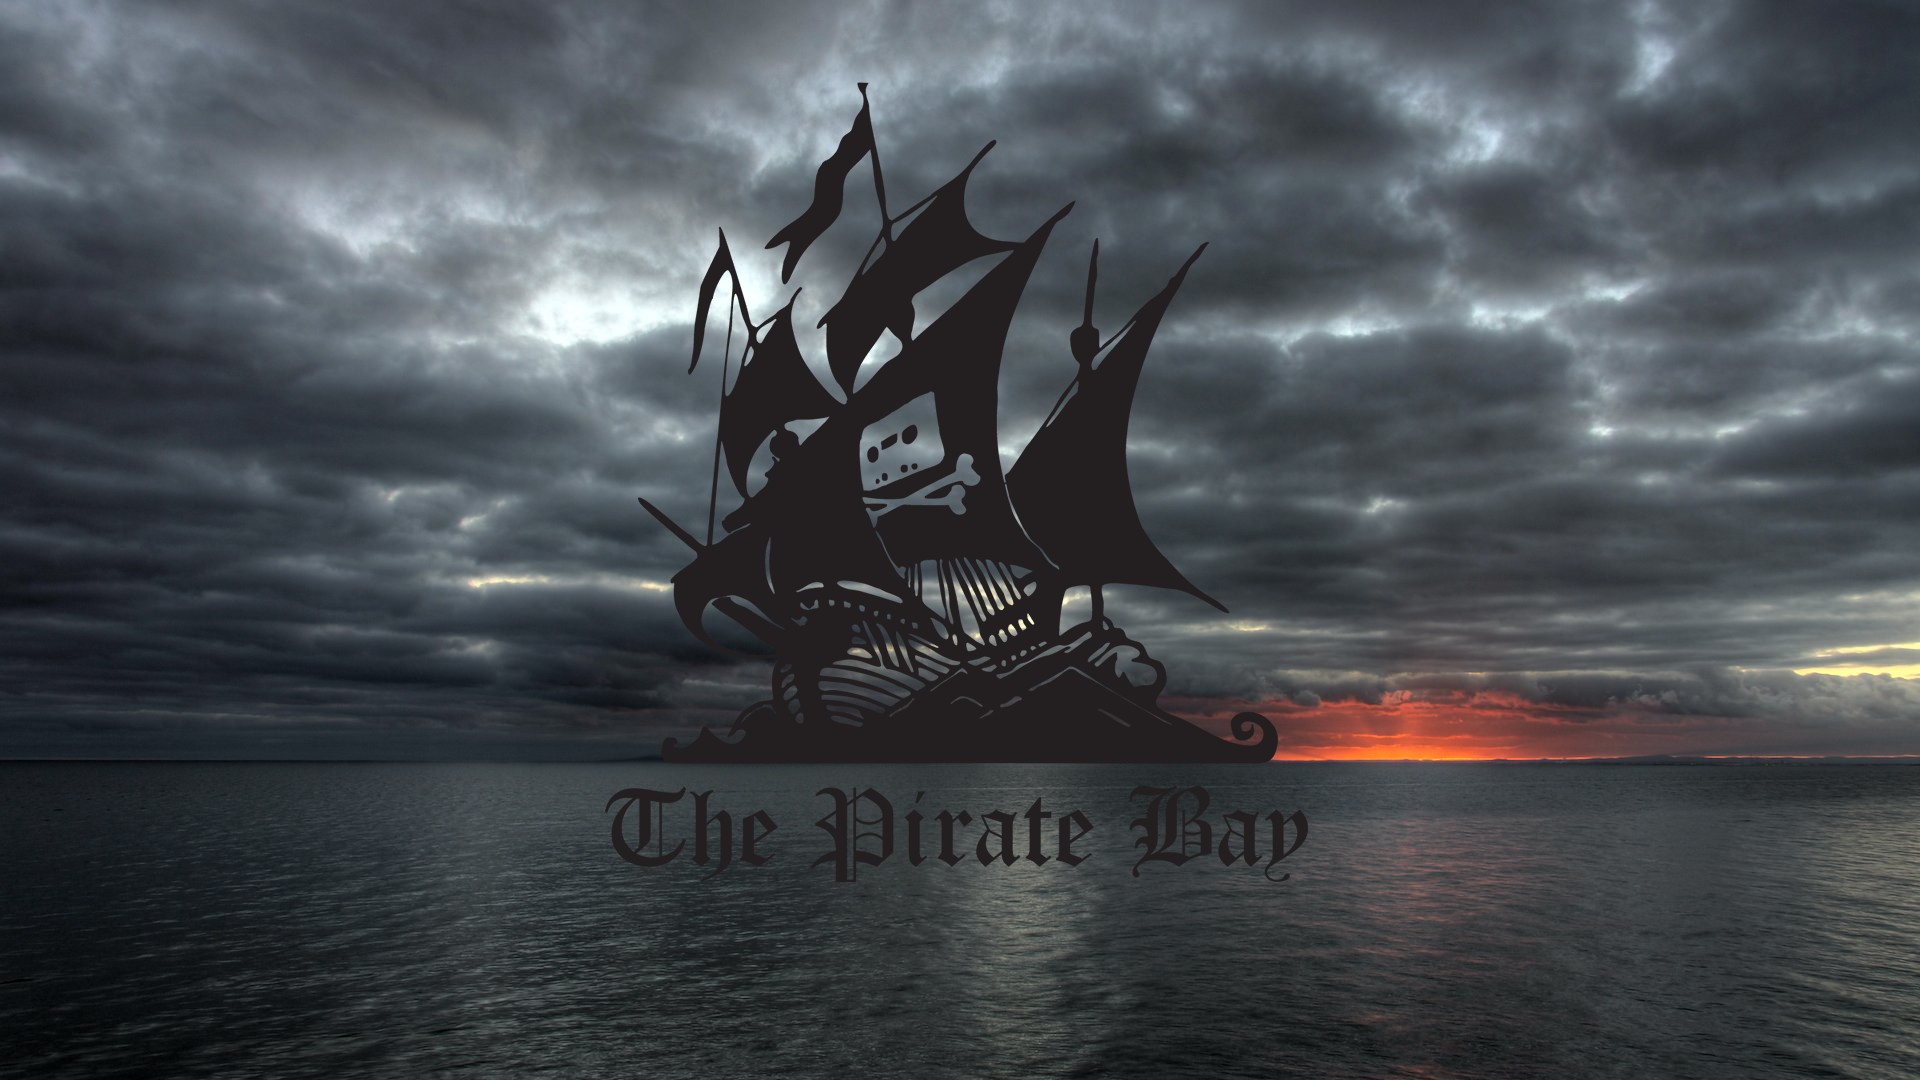 The Pirate Bay Desktop and mobile wallpaper Wallippo